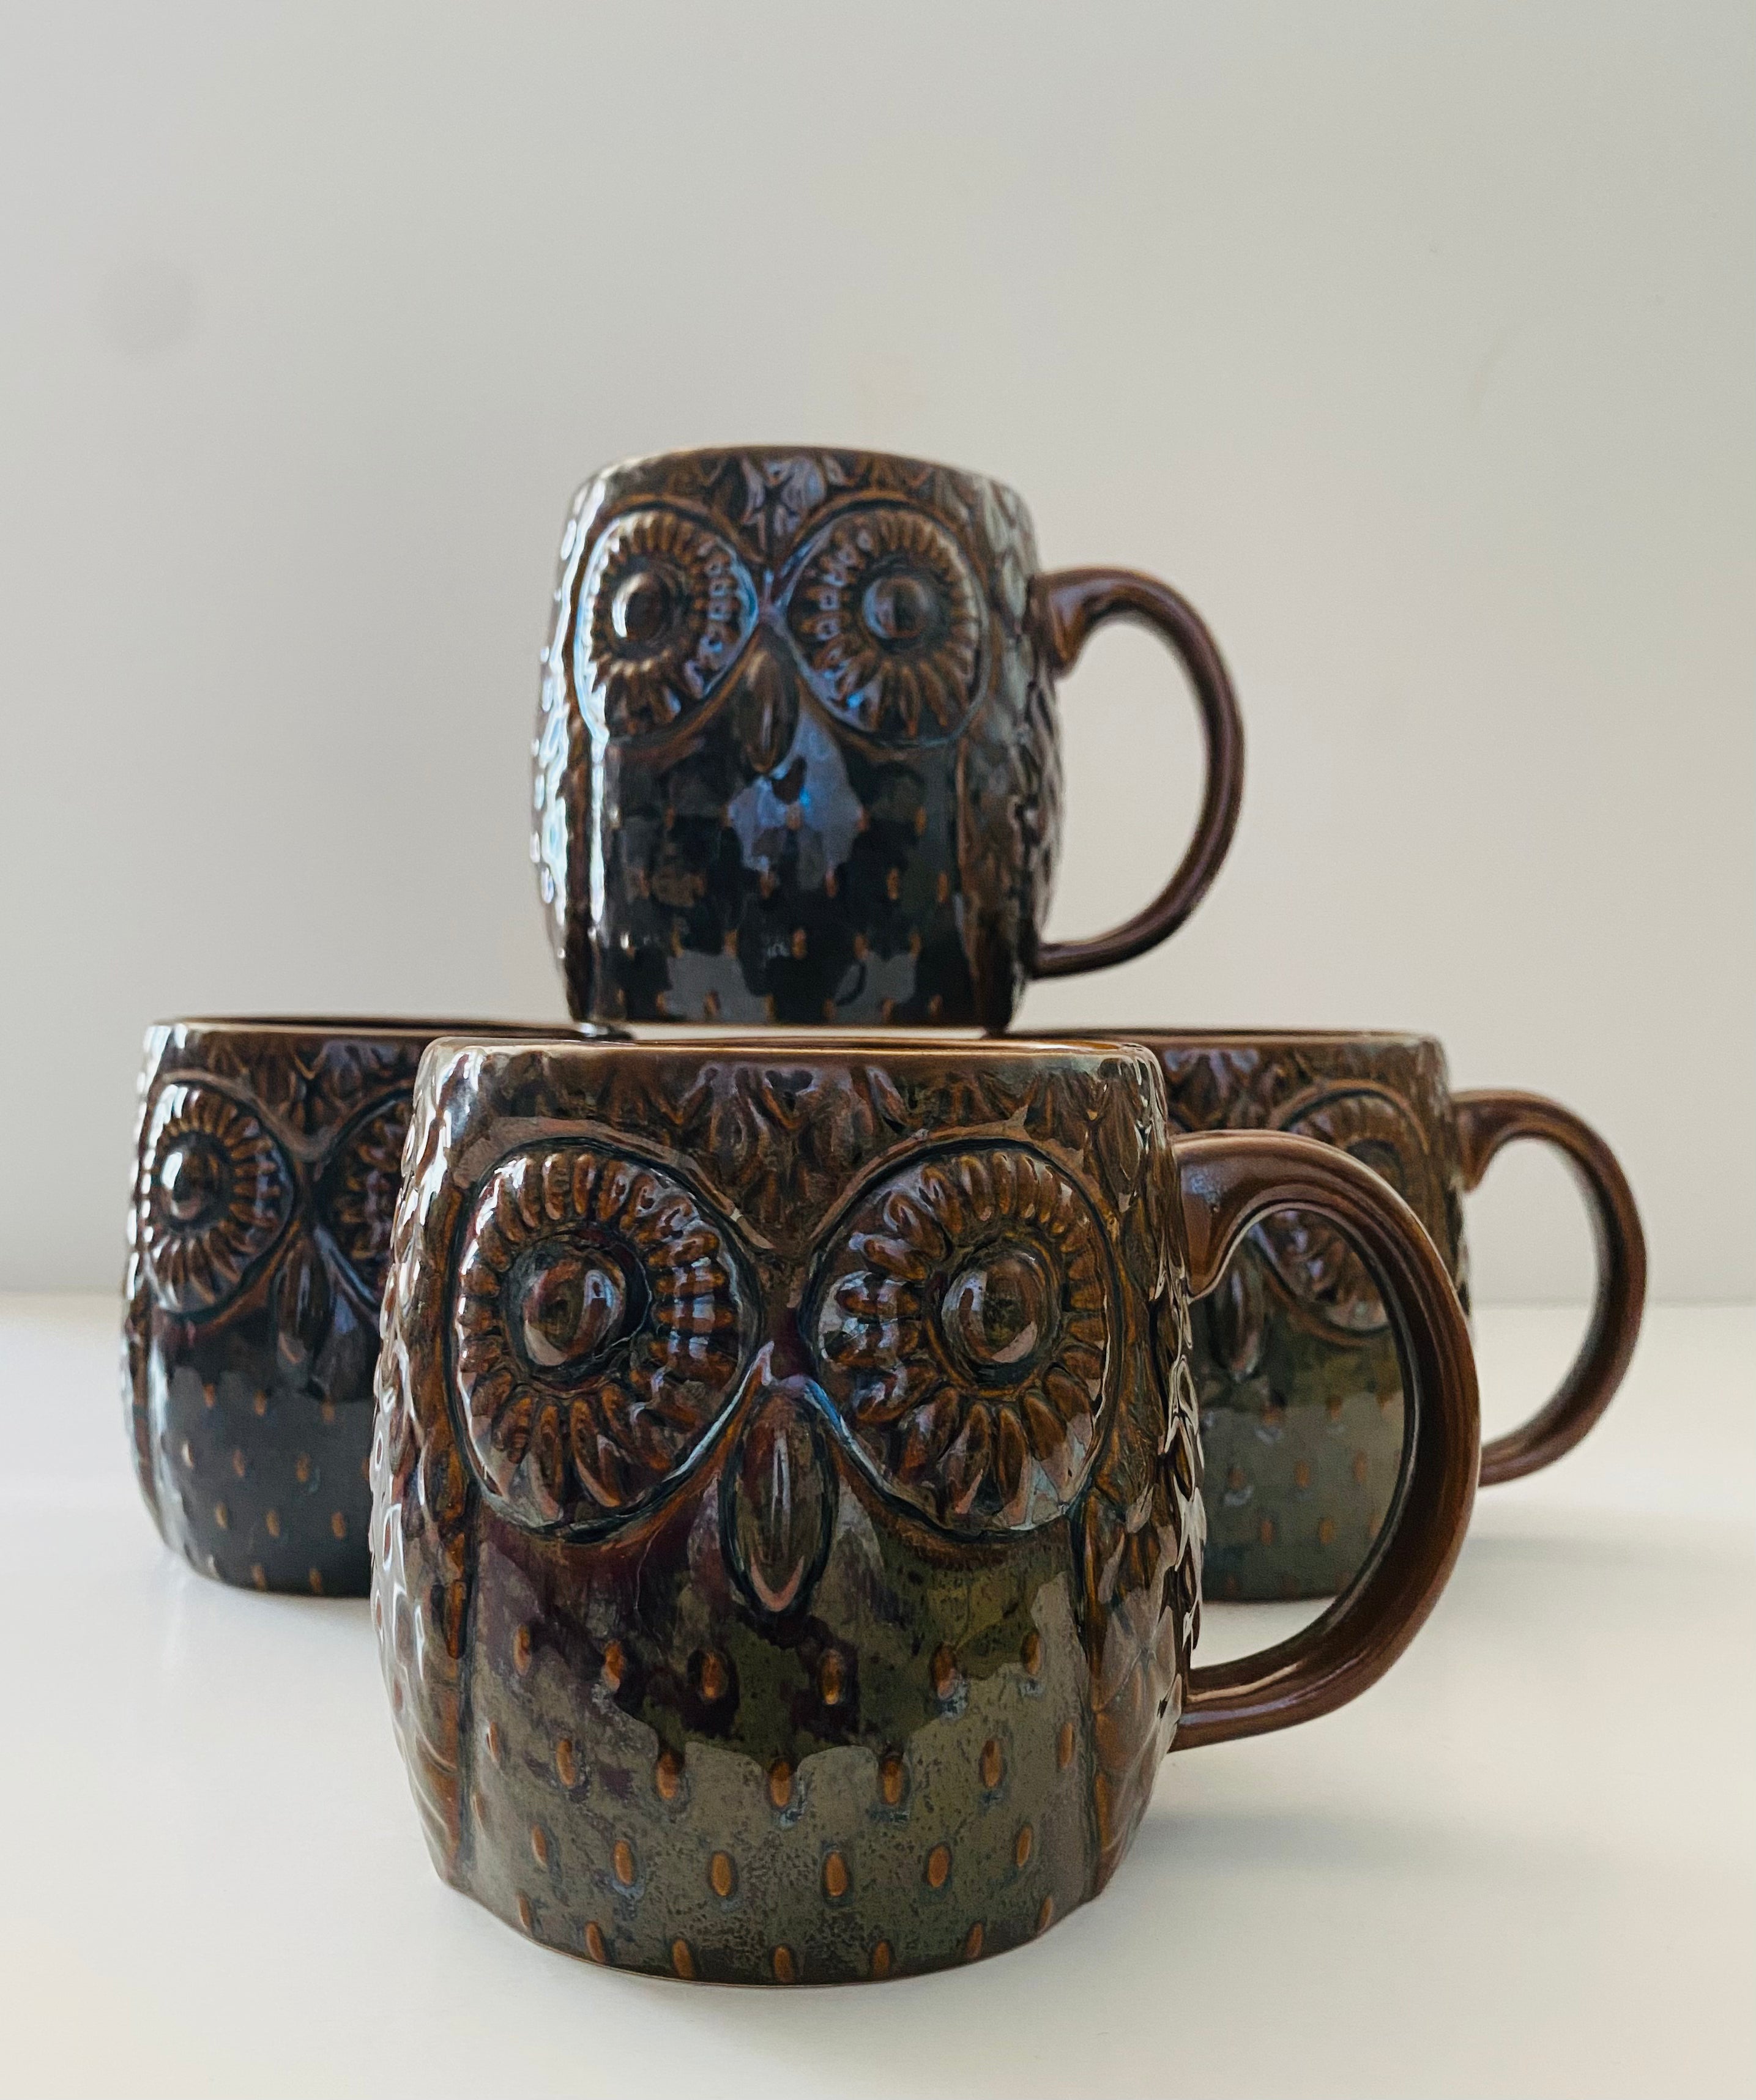 Vintage West Elm Owl Mugs - Set of 4